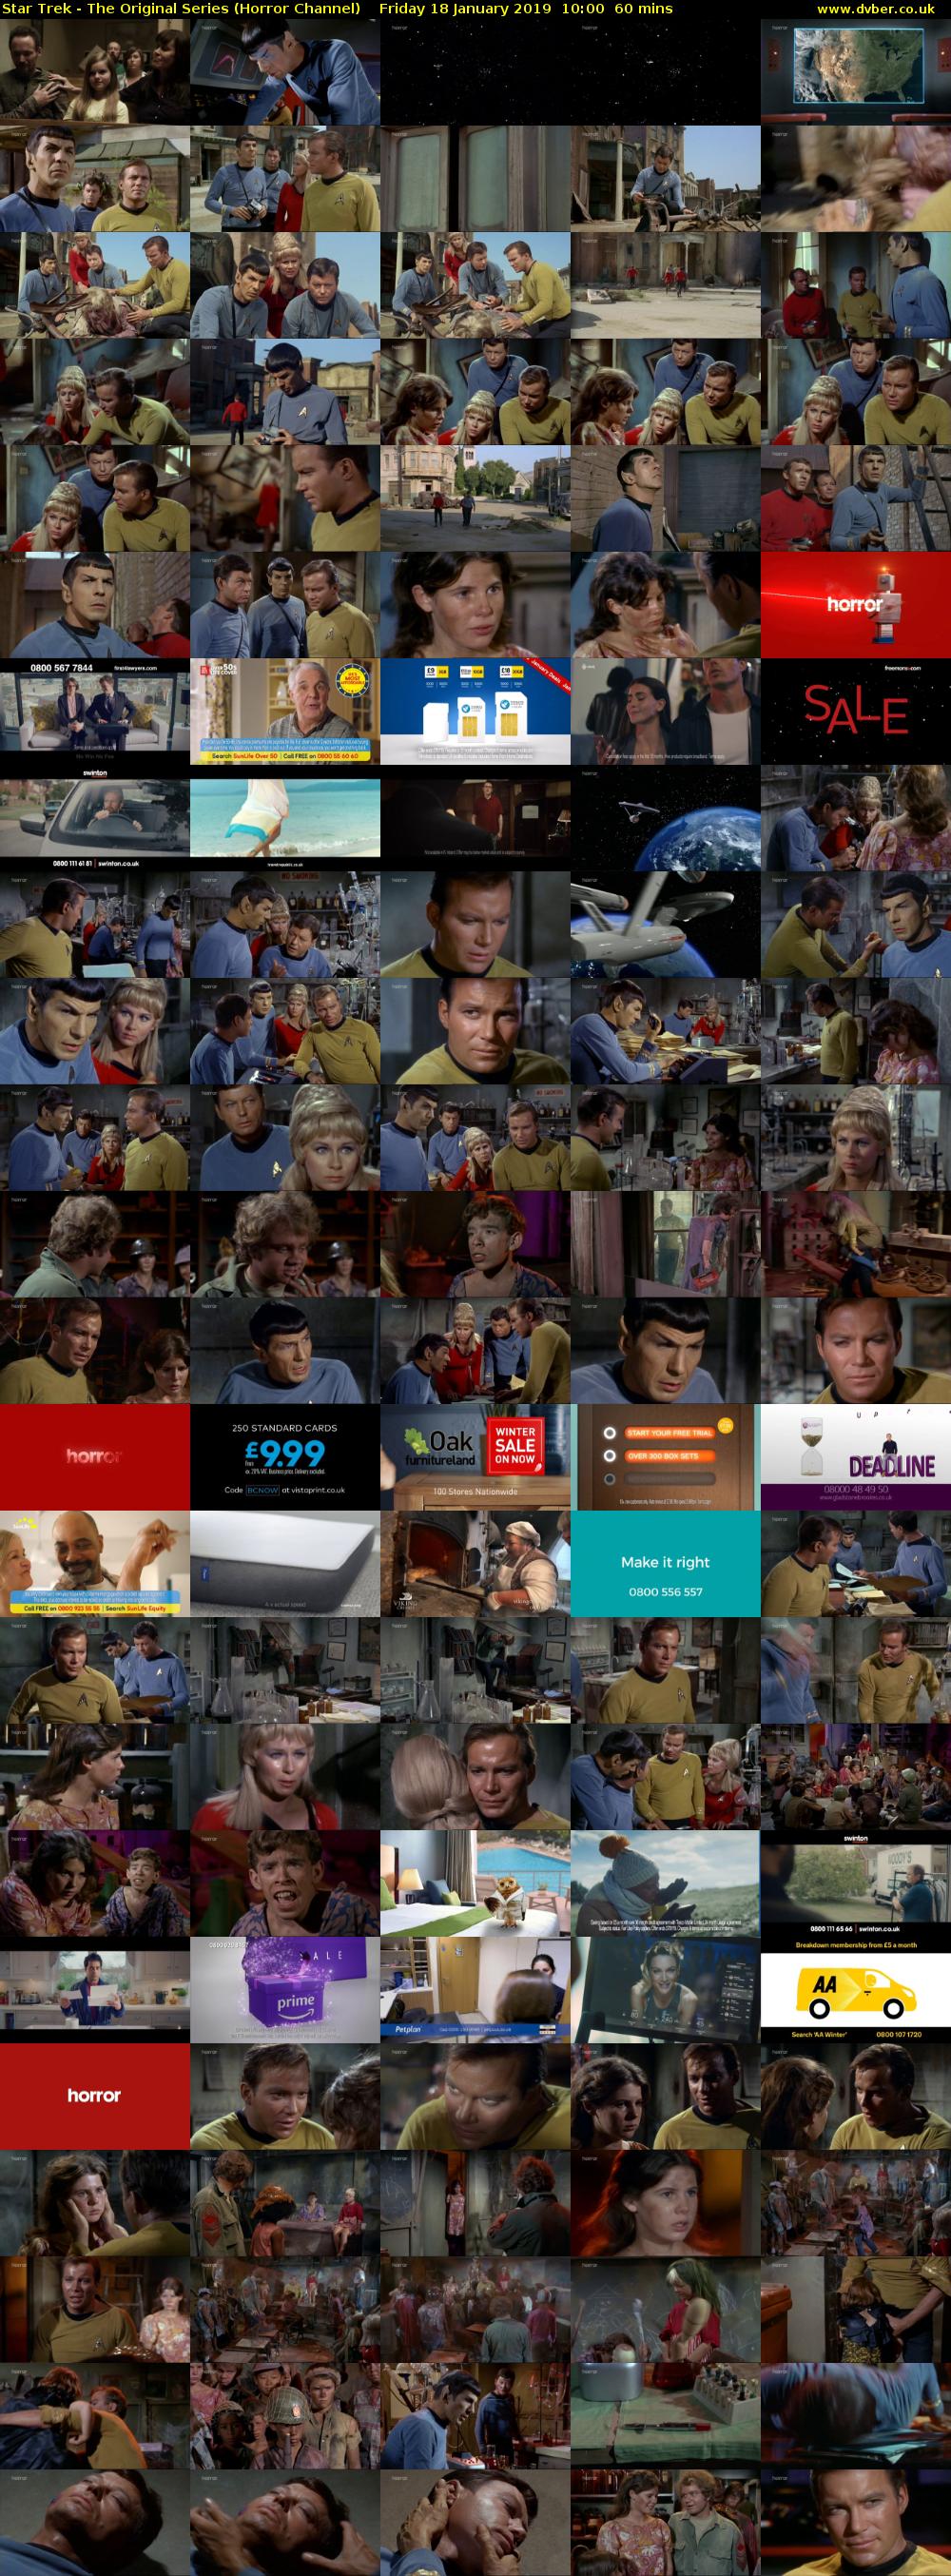 Star Trek - The Original Series (Horror Channel) Friday 18 January 2019 10:00 - 11:00